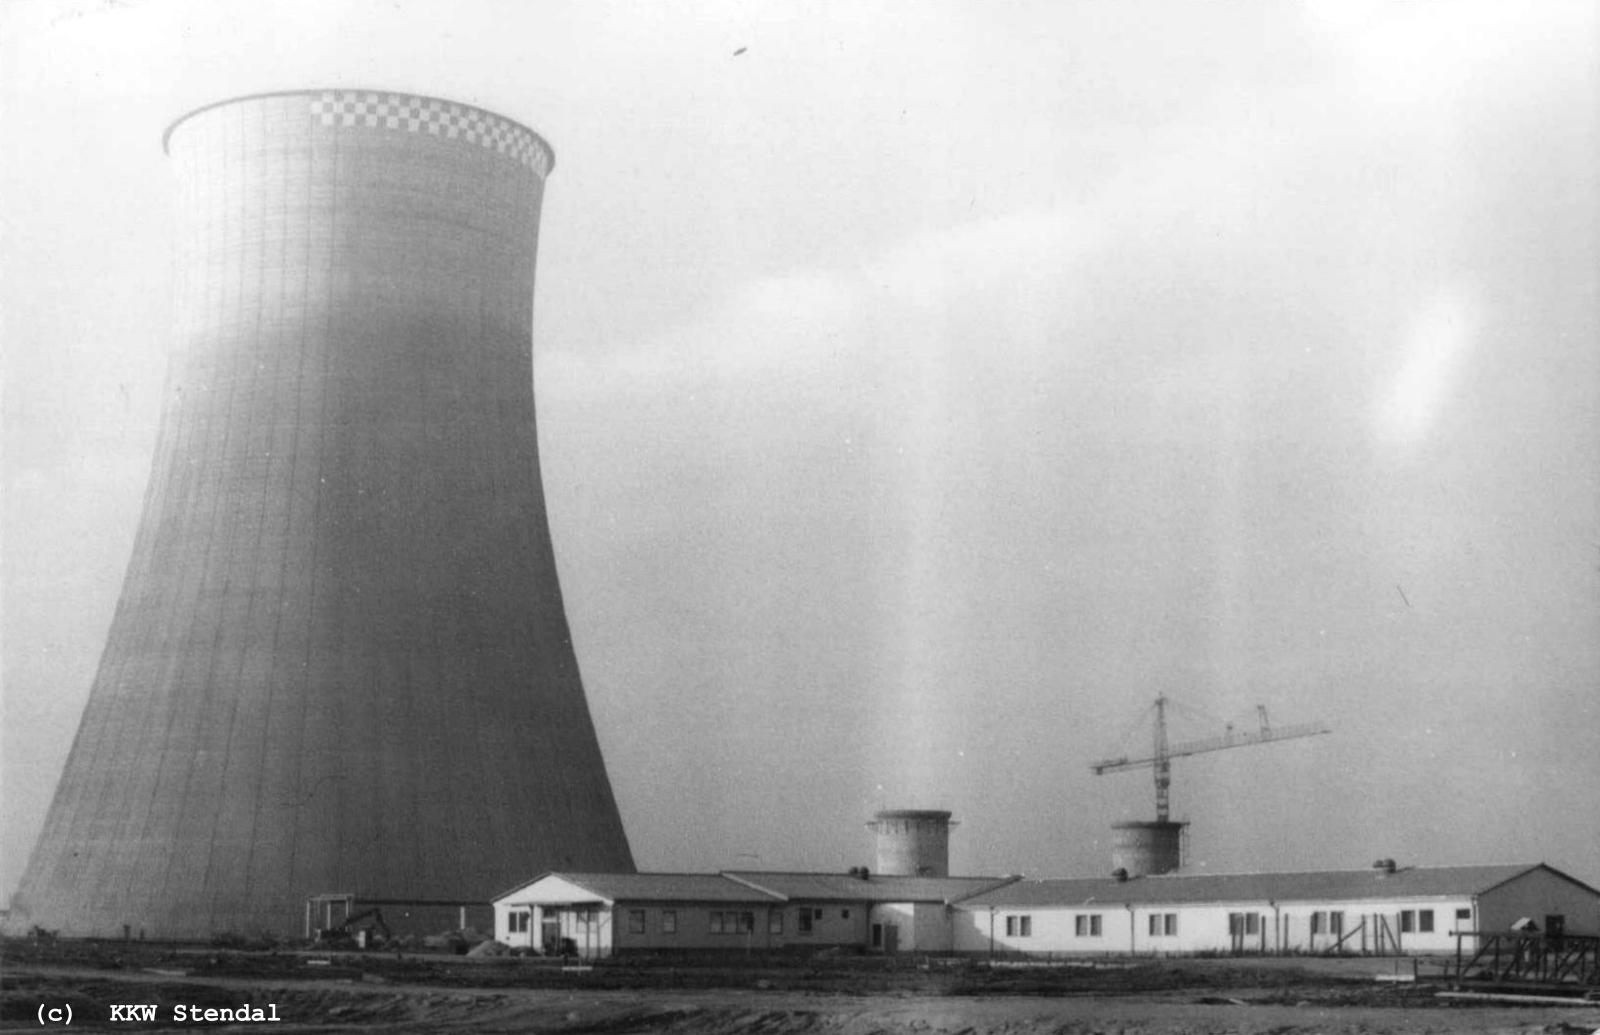  AKW Stendal, Baustelle 1988, Baukche III 